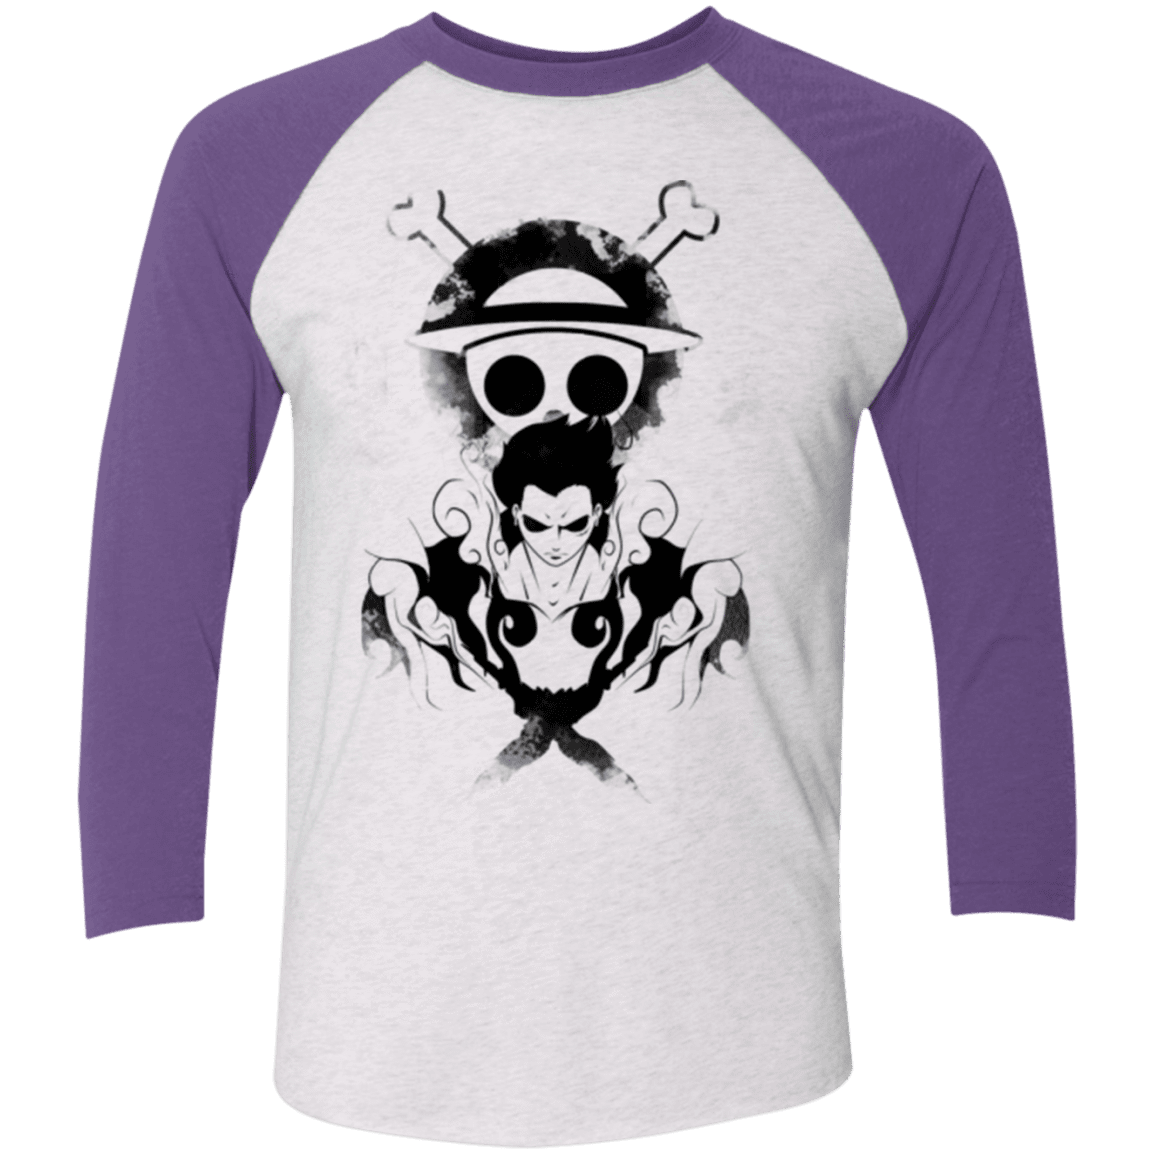 T-Shirts Heather White/Purple Rush / X-Small Gear 4 Men's Triblend 3/4 Sleeve